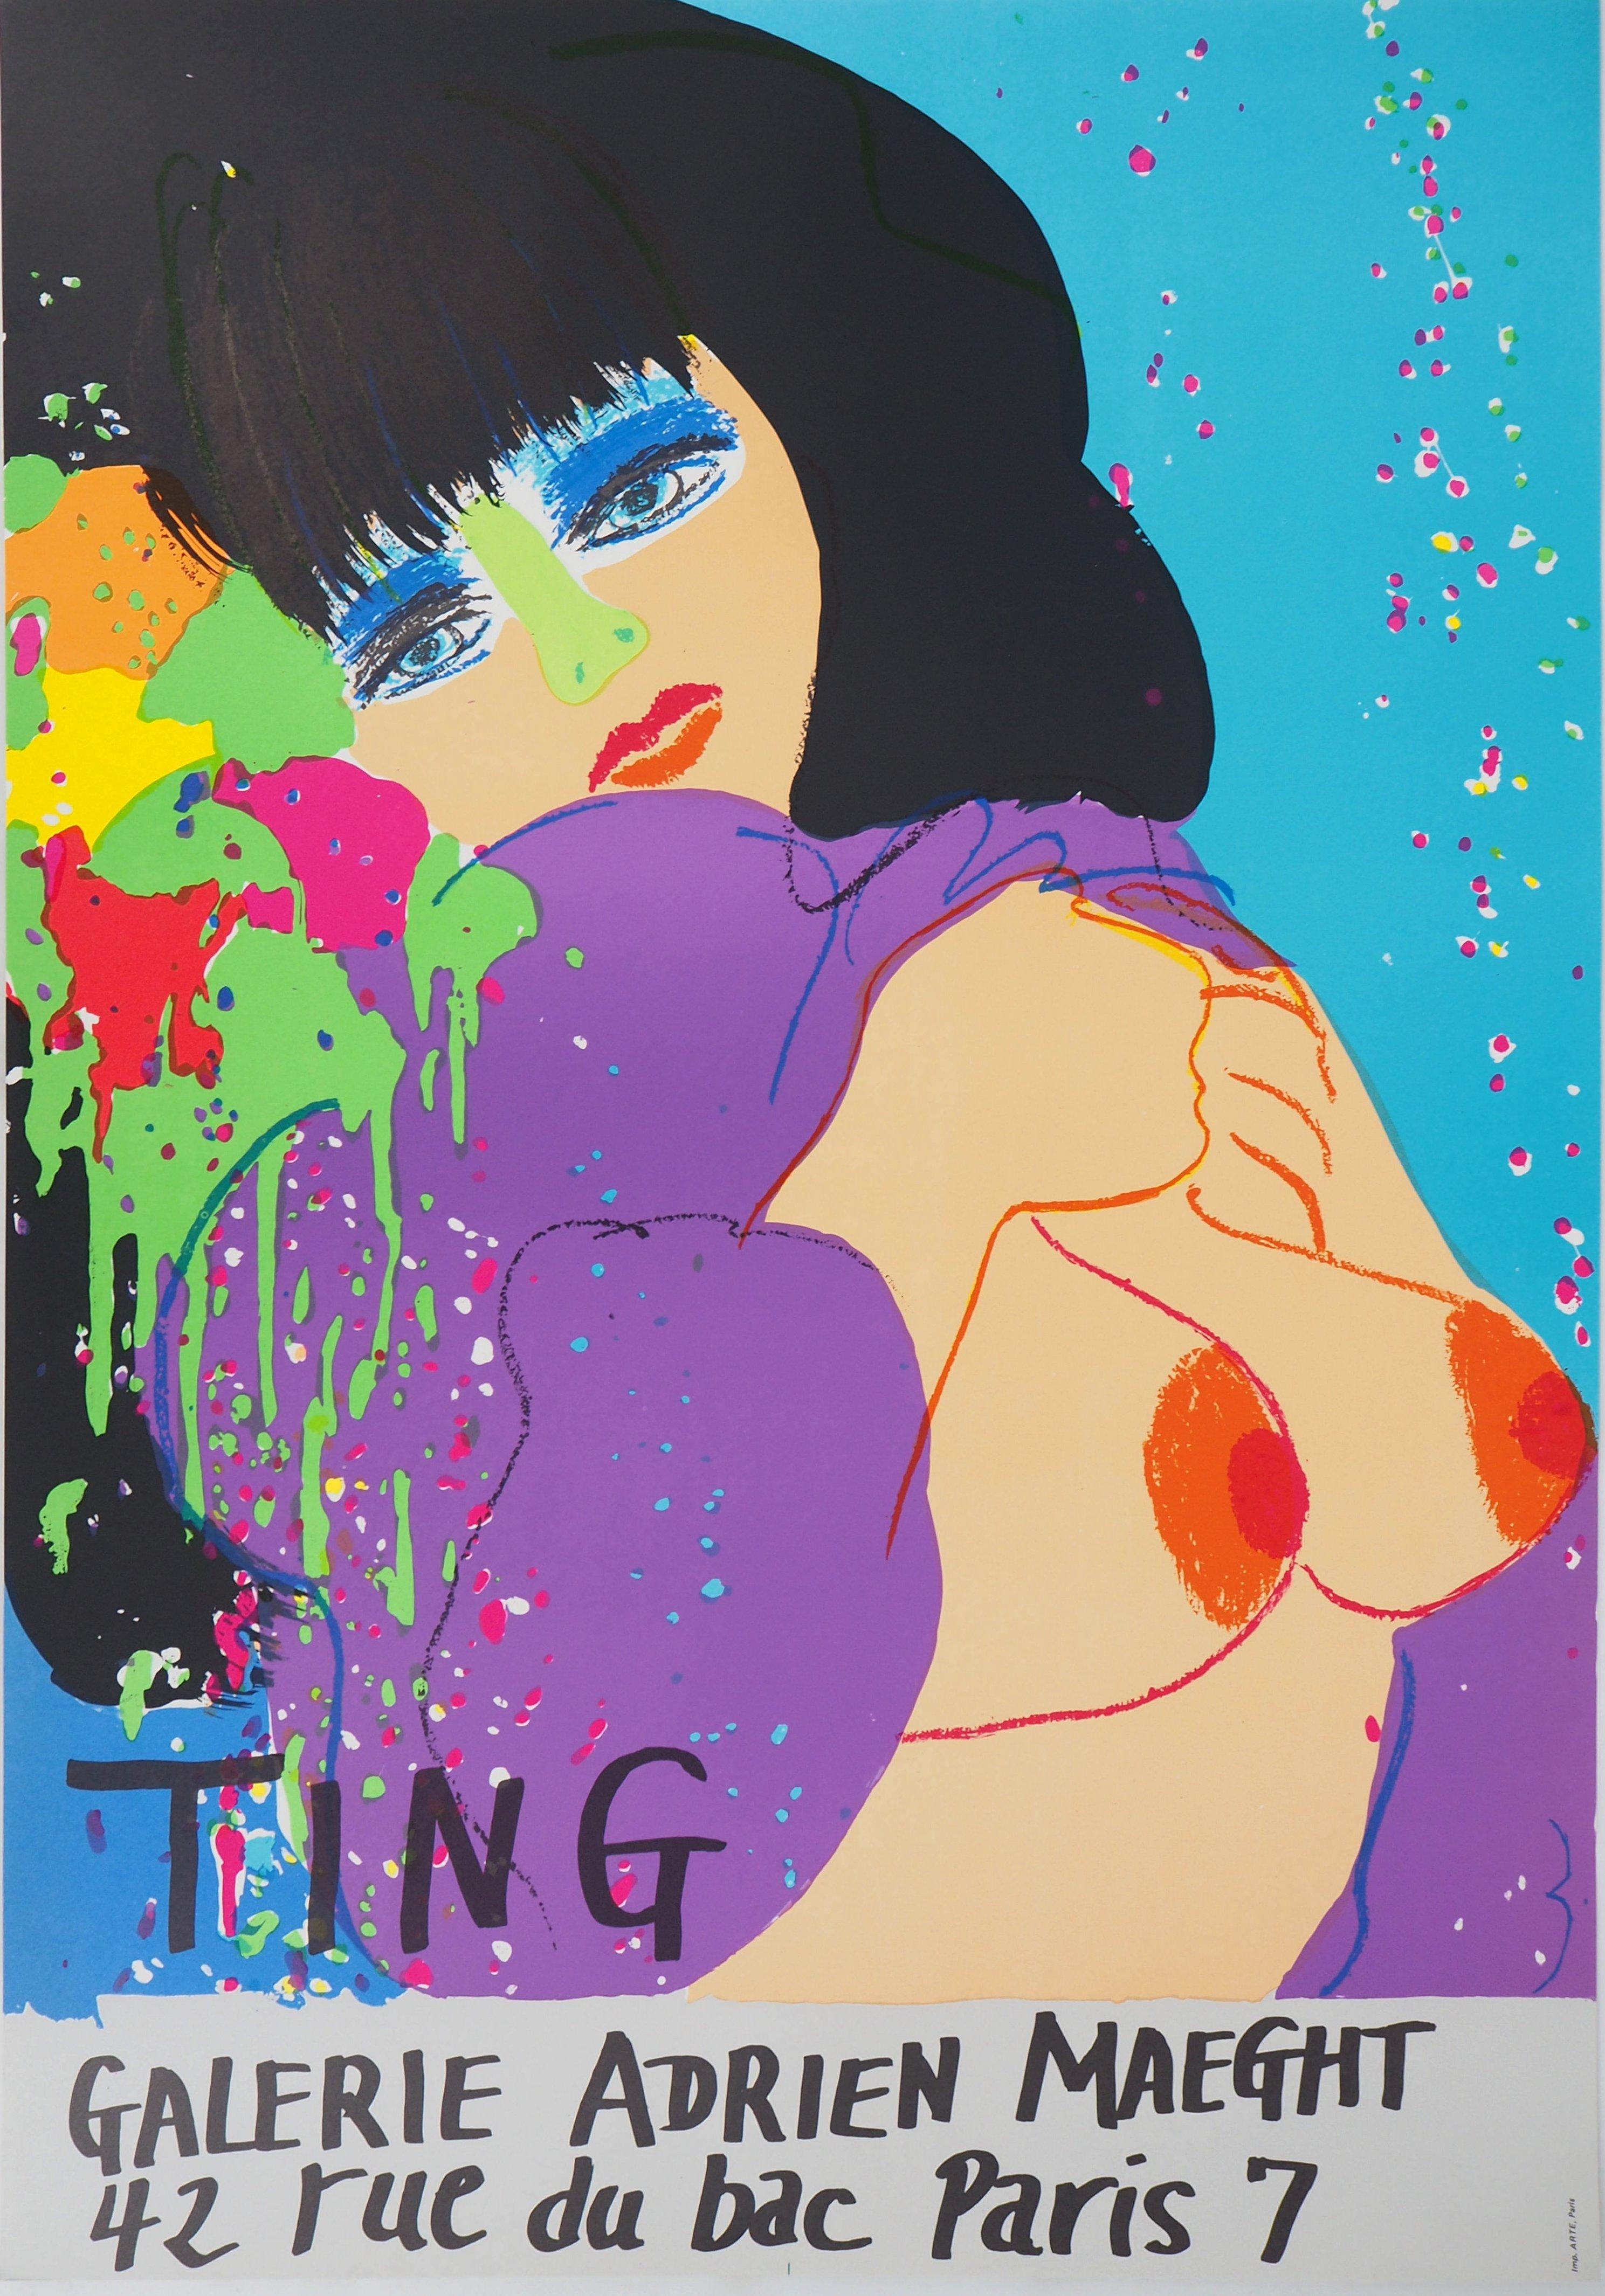 Walasse Ting Nude Print – Nude auf blauem Rücken – Original Lithographieplakat (Maeght, 1974)